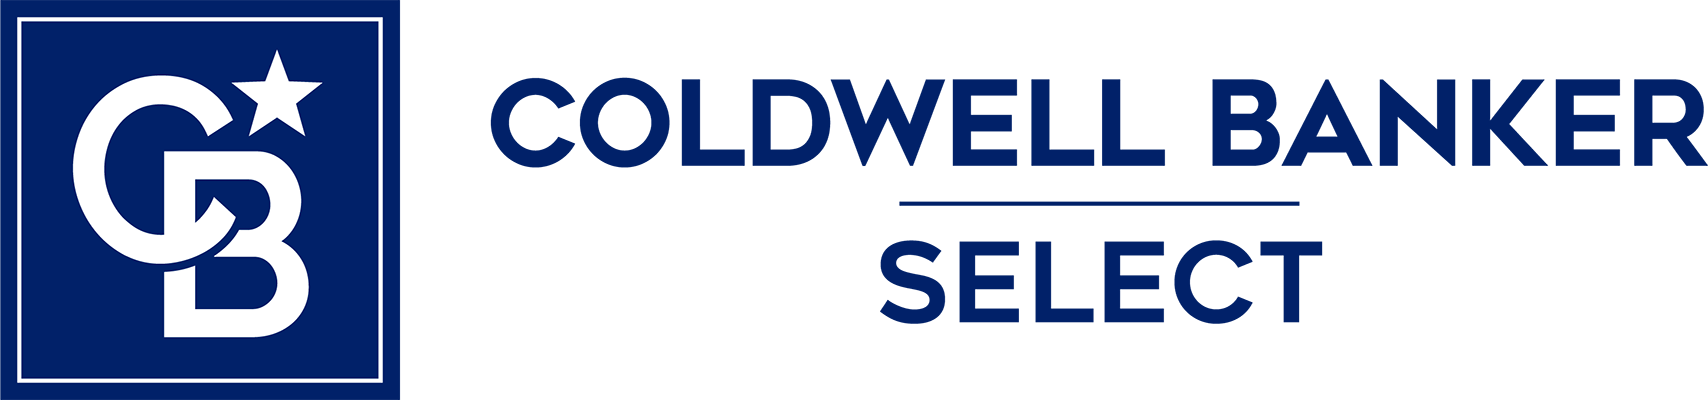 Leonor Carnoske - Coldwell Banker Select Logo